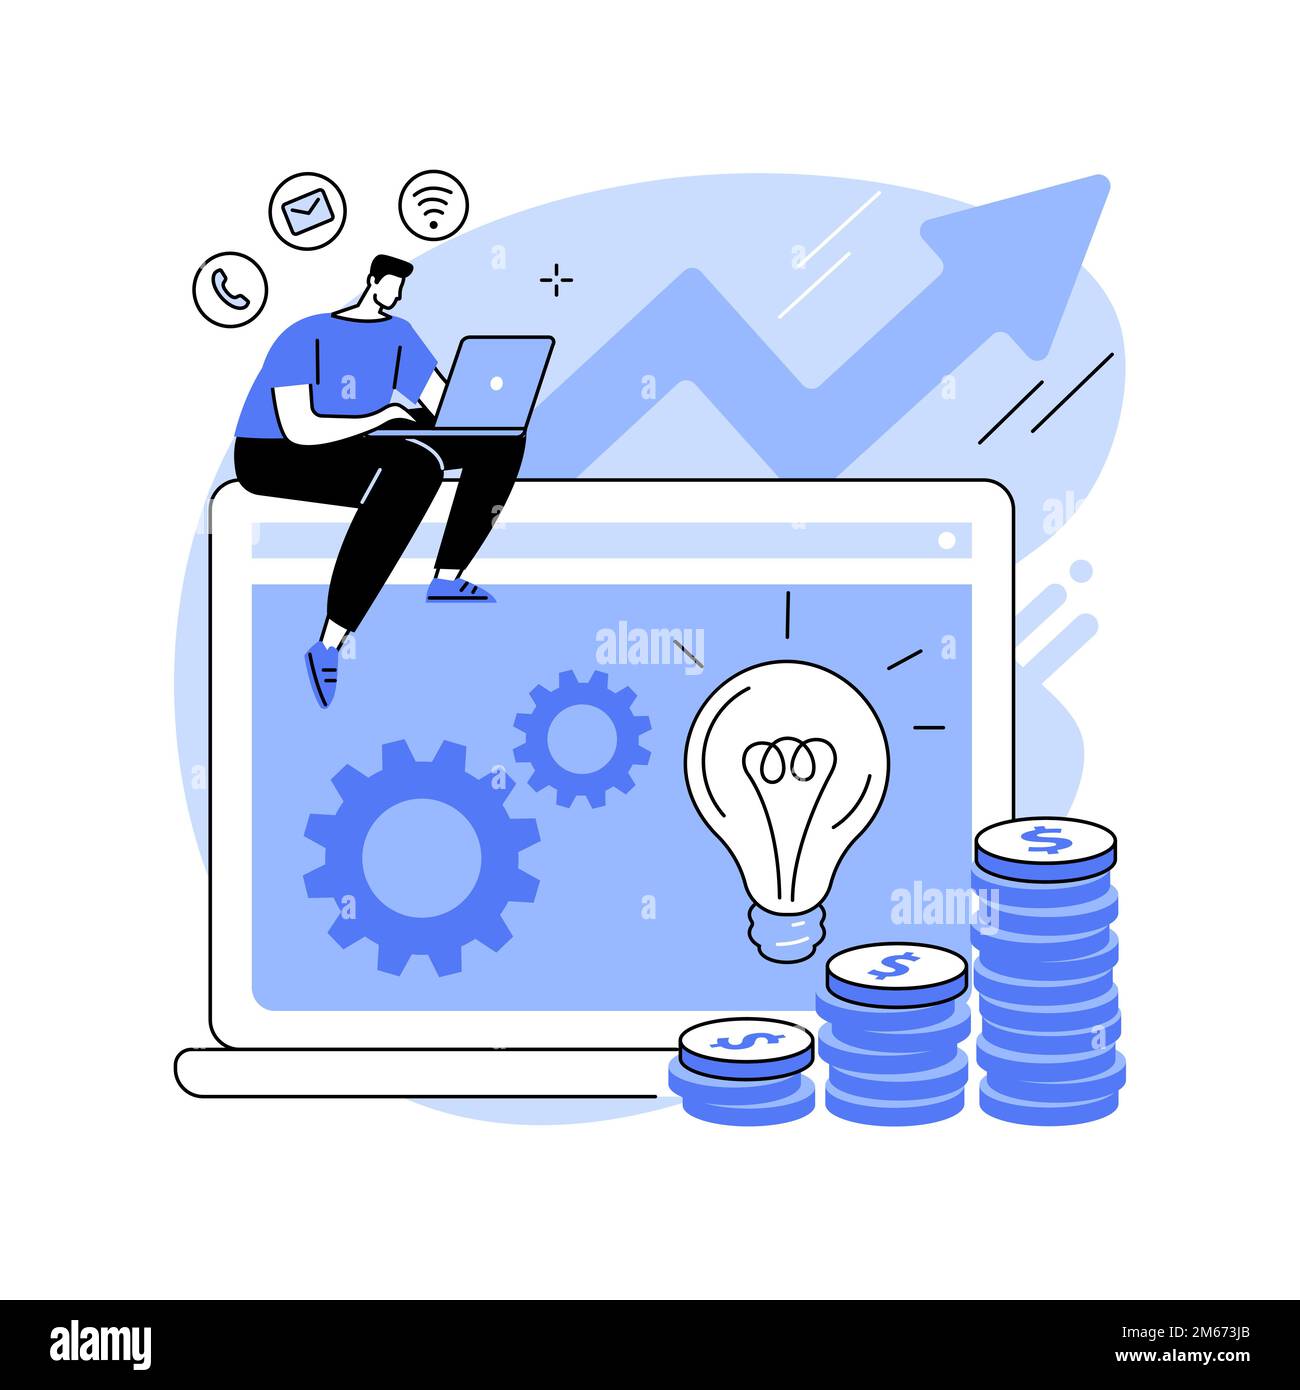 Online business abstract concept vector illustration. Business opportunity, online startup, ecommerce platform, internet marketing, social media sales Stock Vector